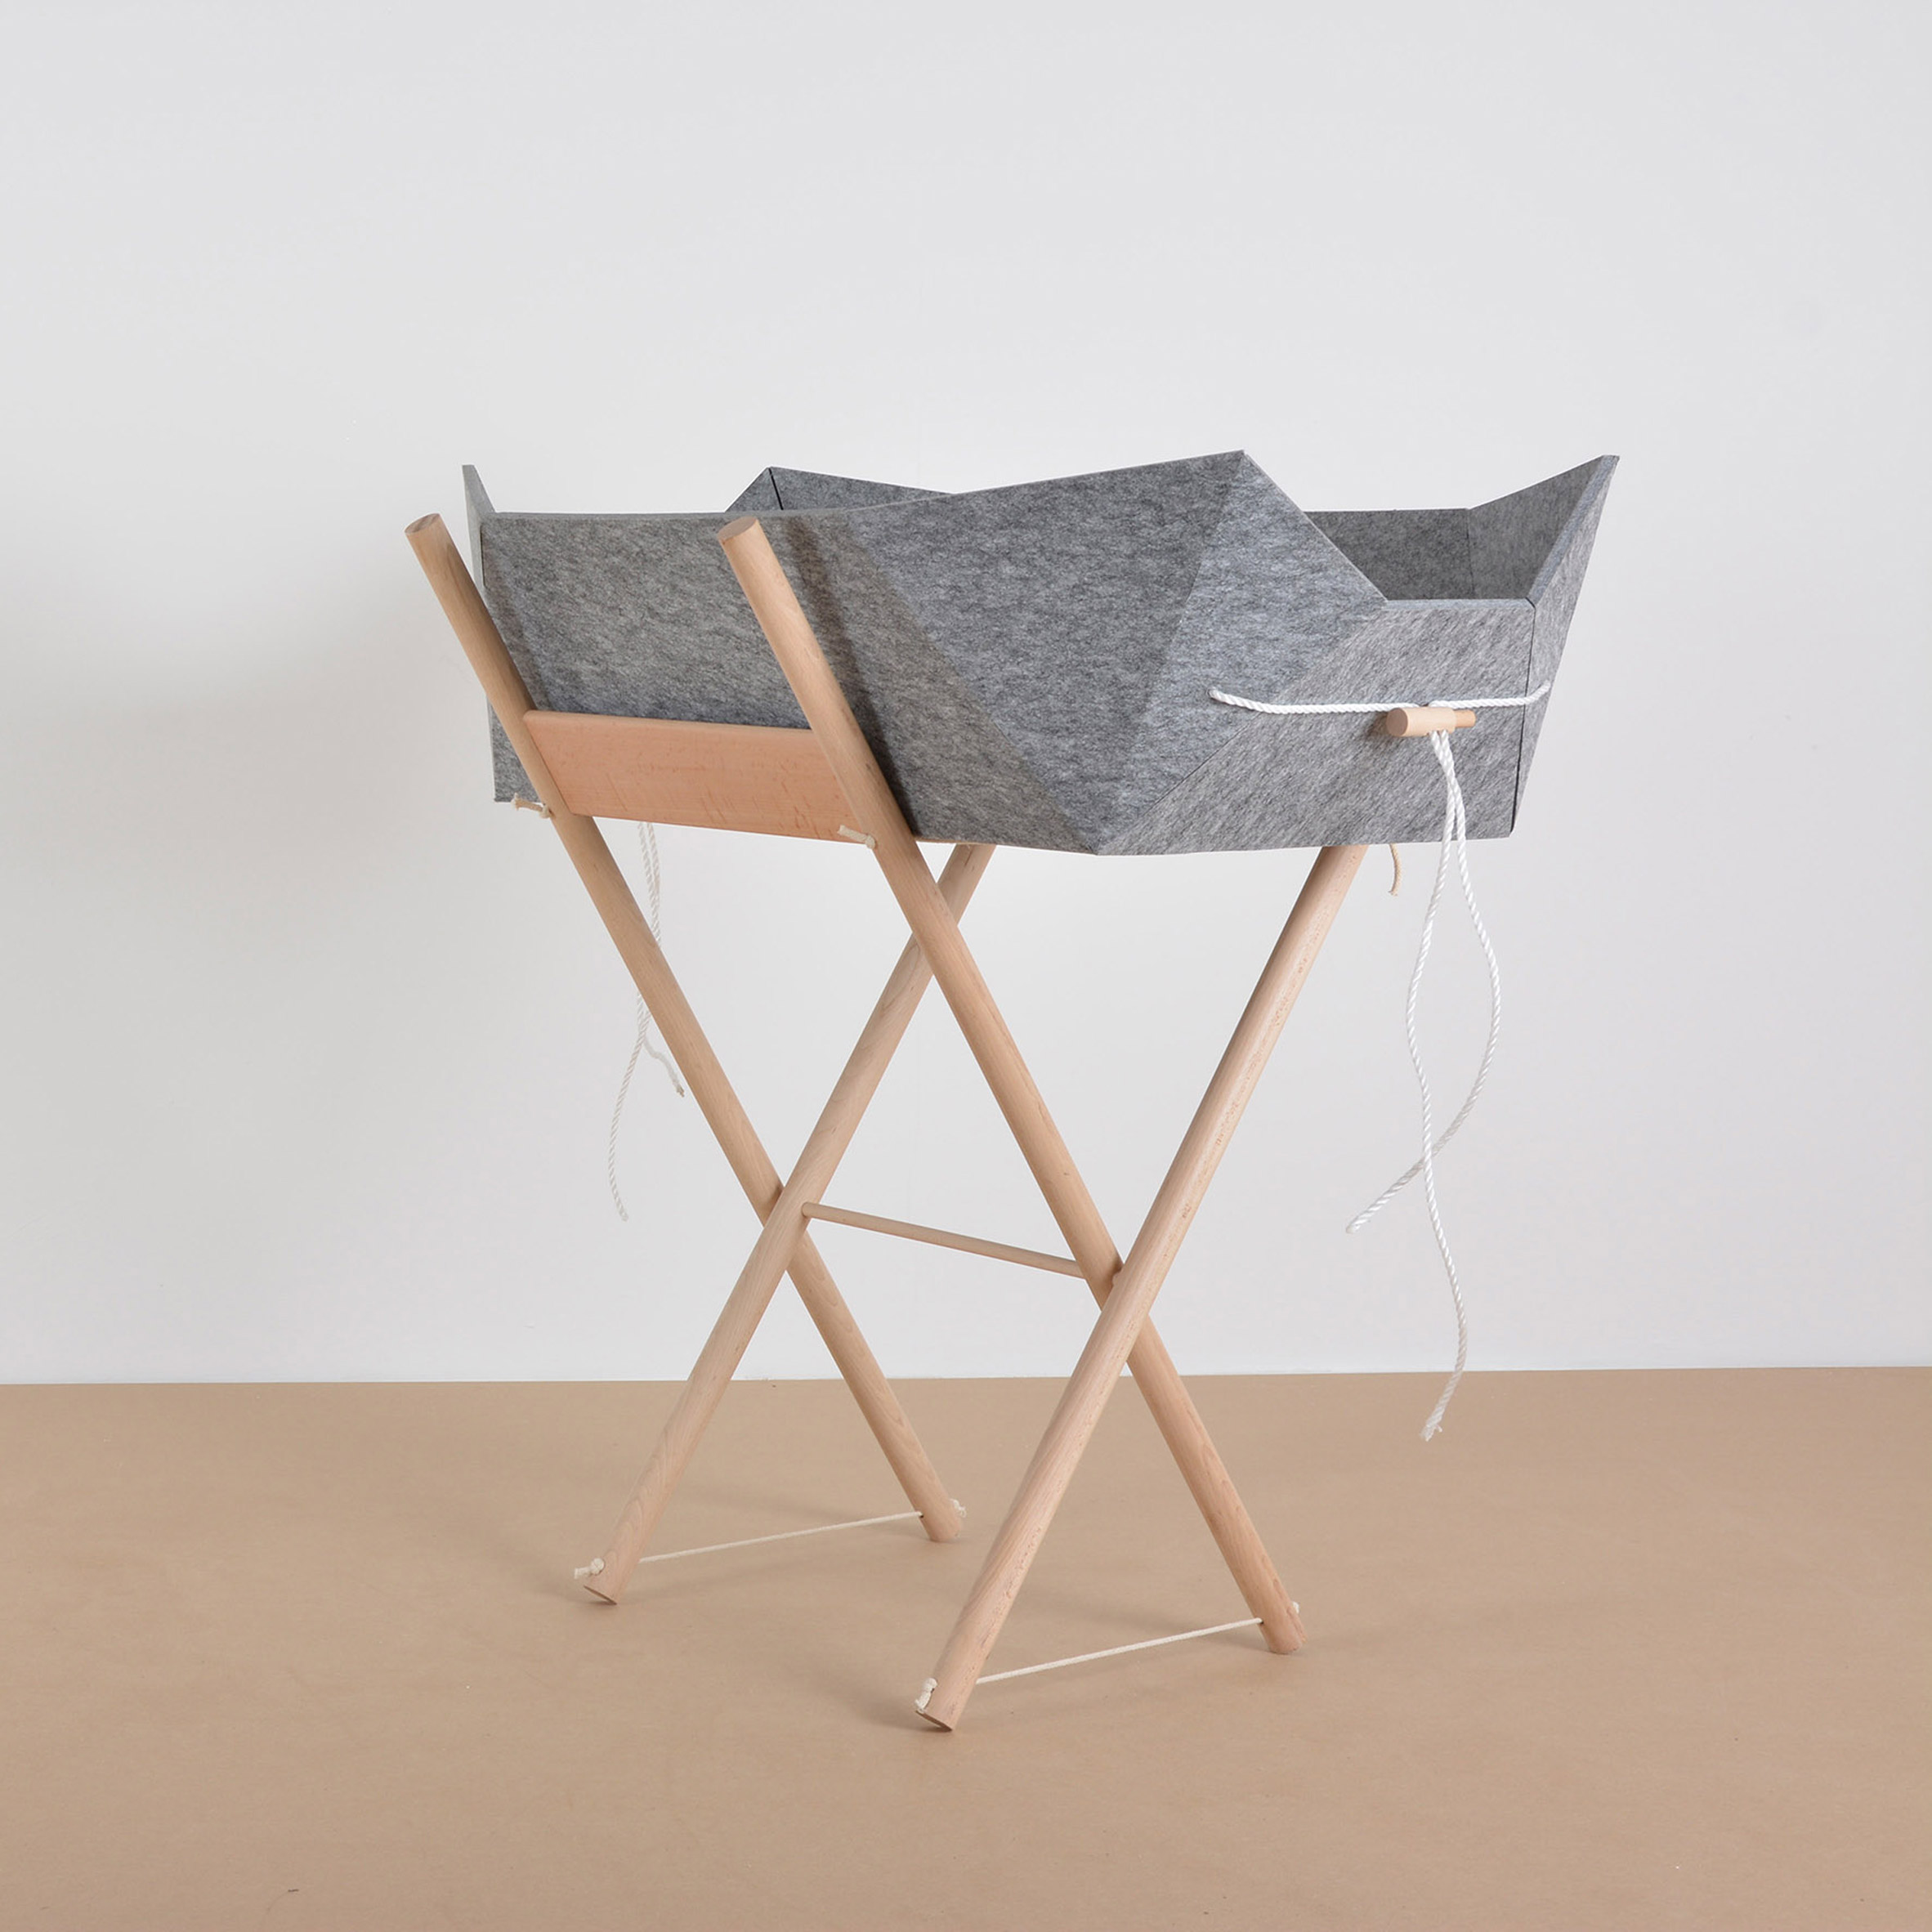 German students design flexible furniture collection using felt composite